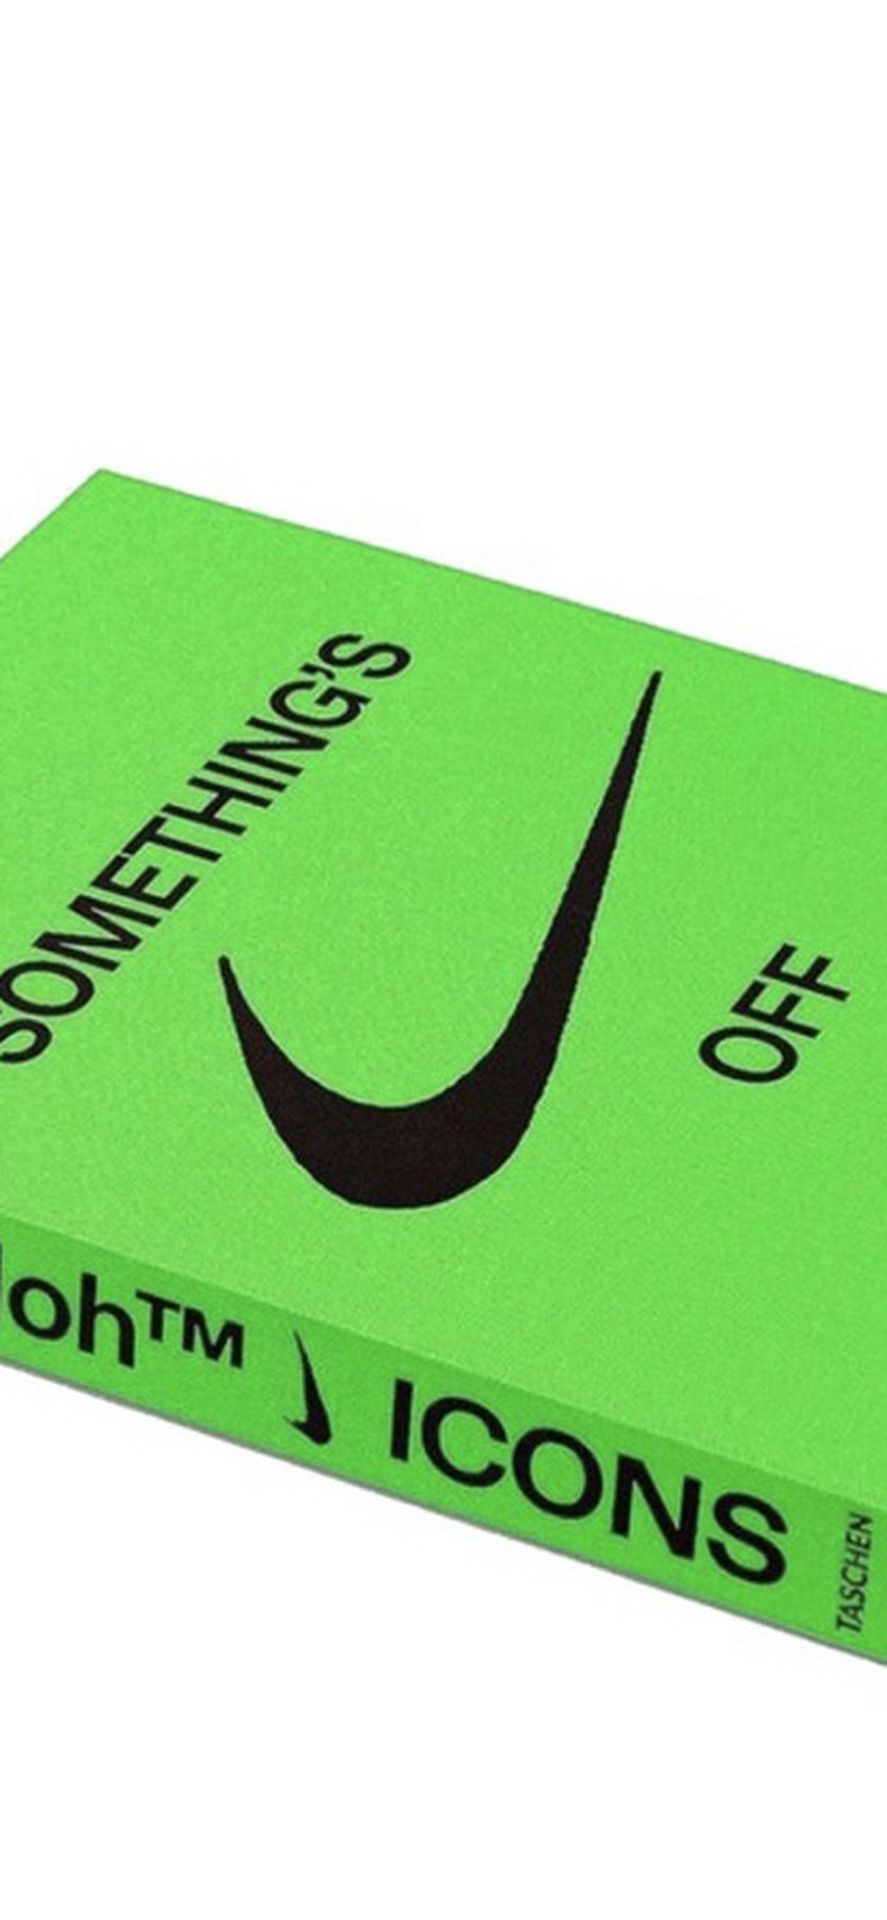 Virgil Abloh x Nike ICONS “The Ten” Something OFF